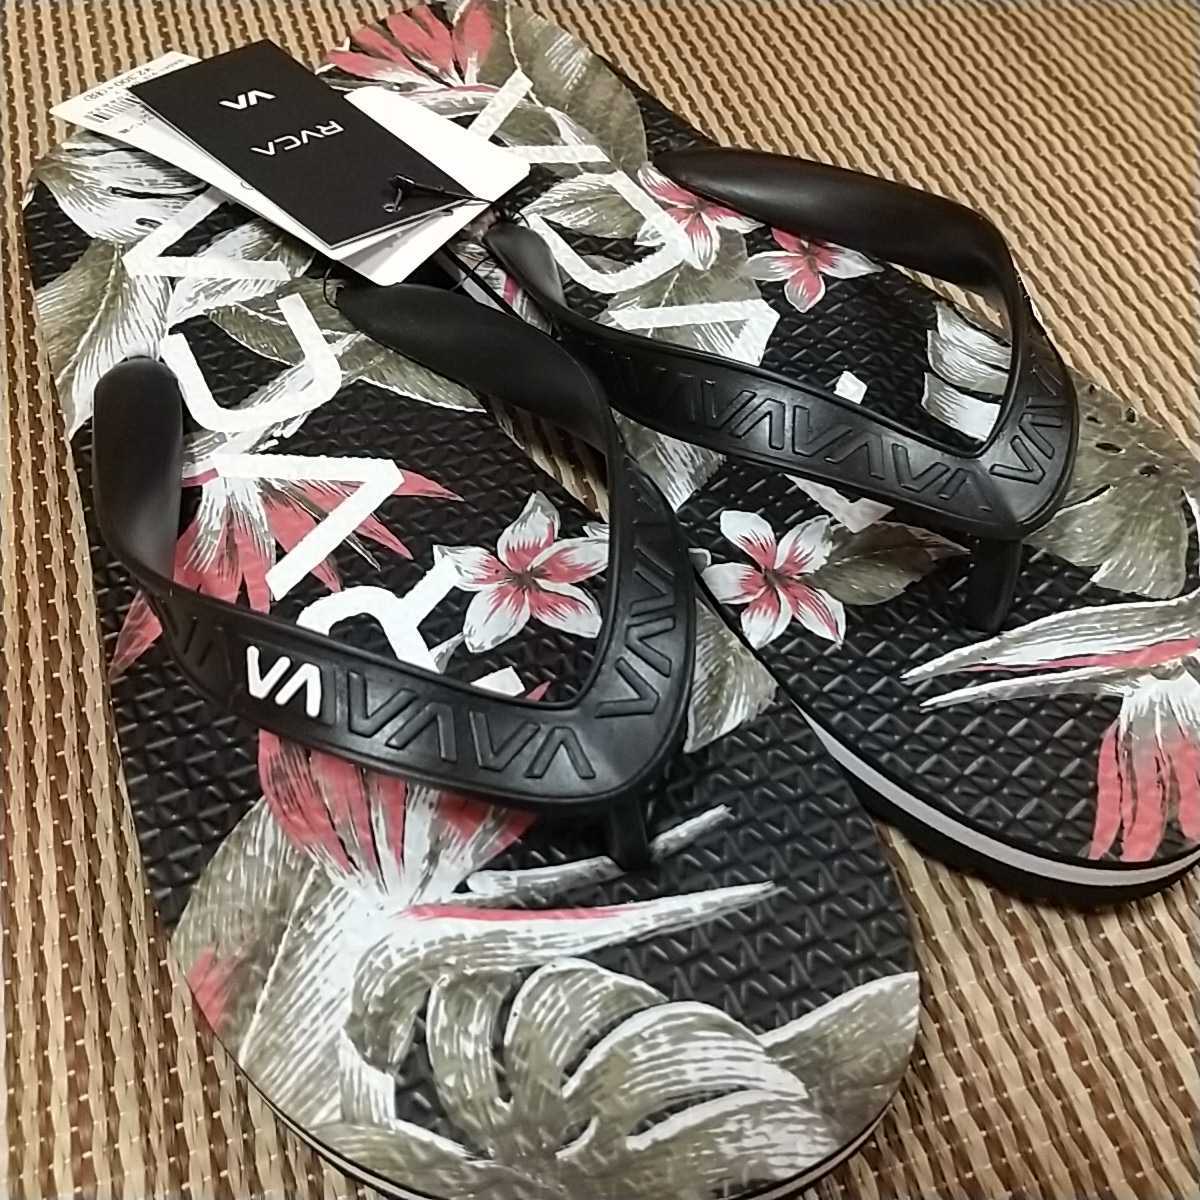 24cm new goods sandals RVCA/ Roo ka beach sandals BA041-978 floral floral print 